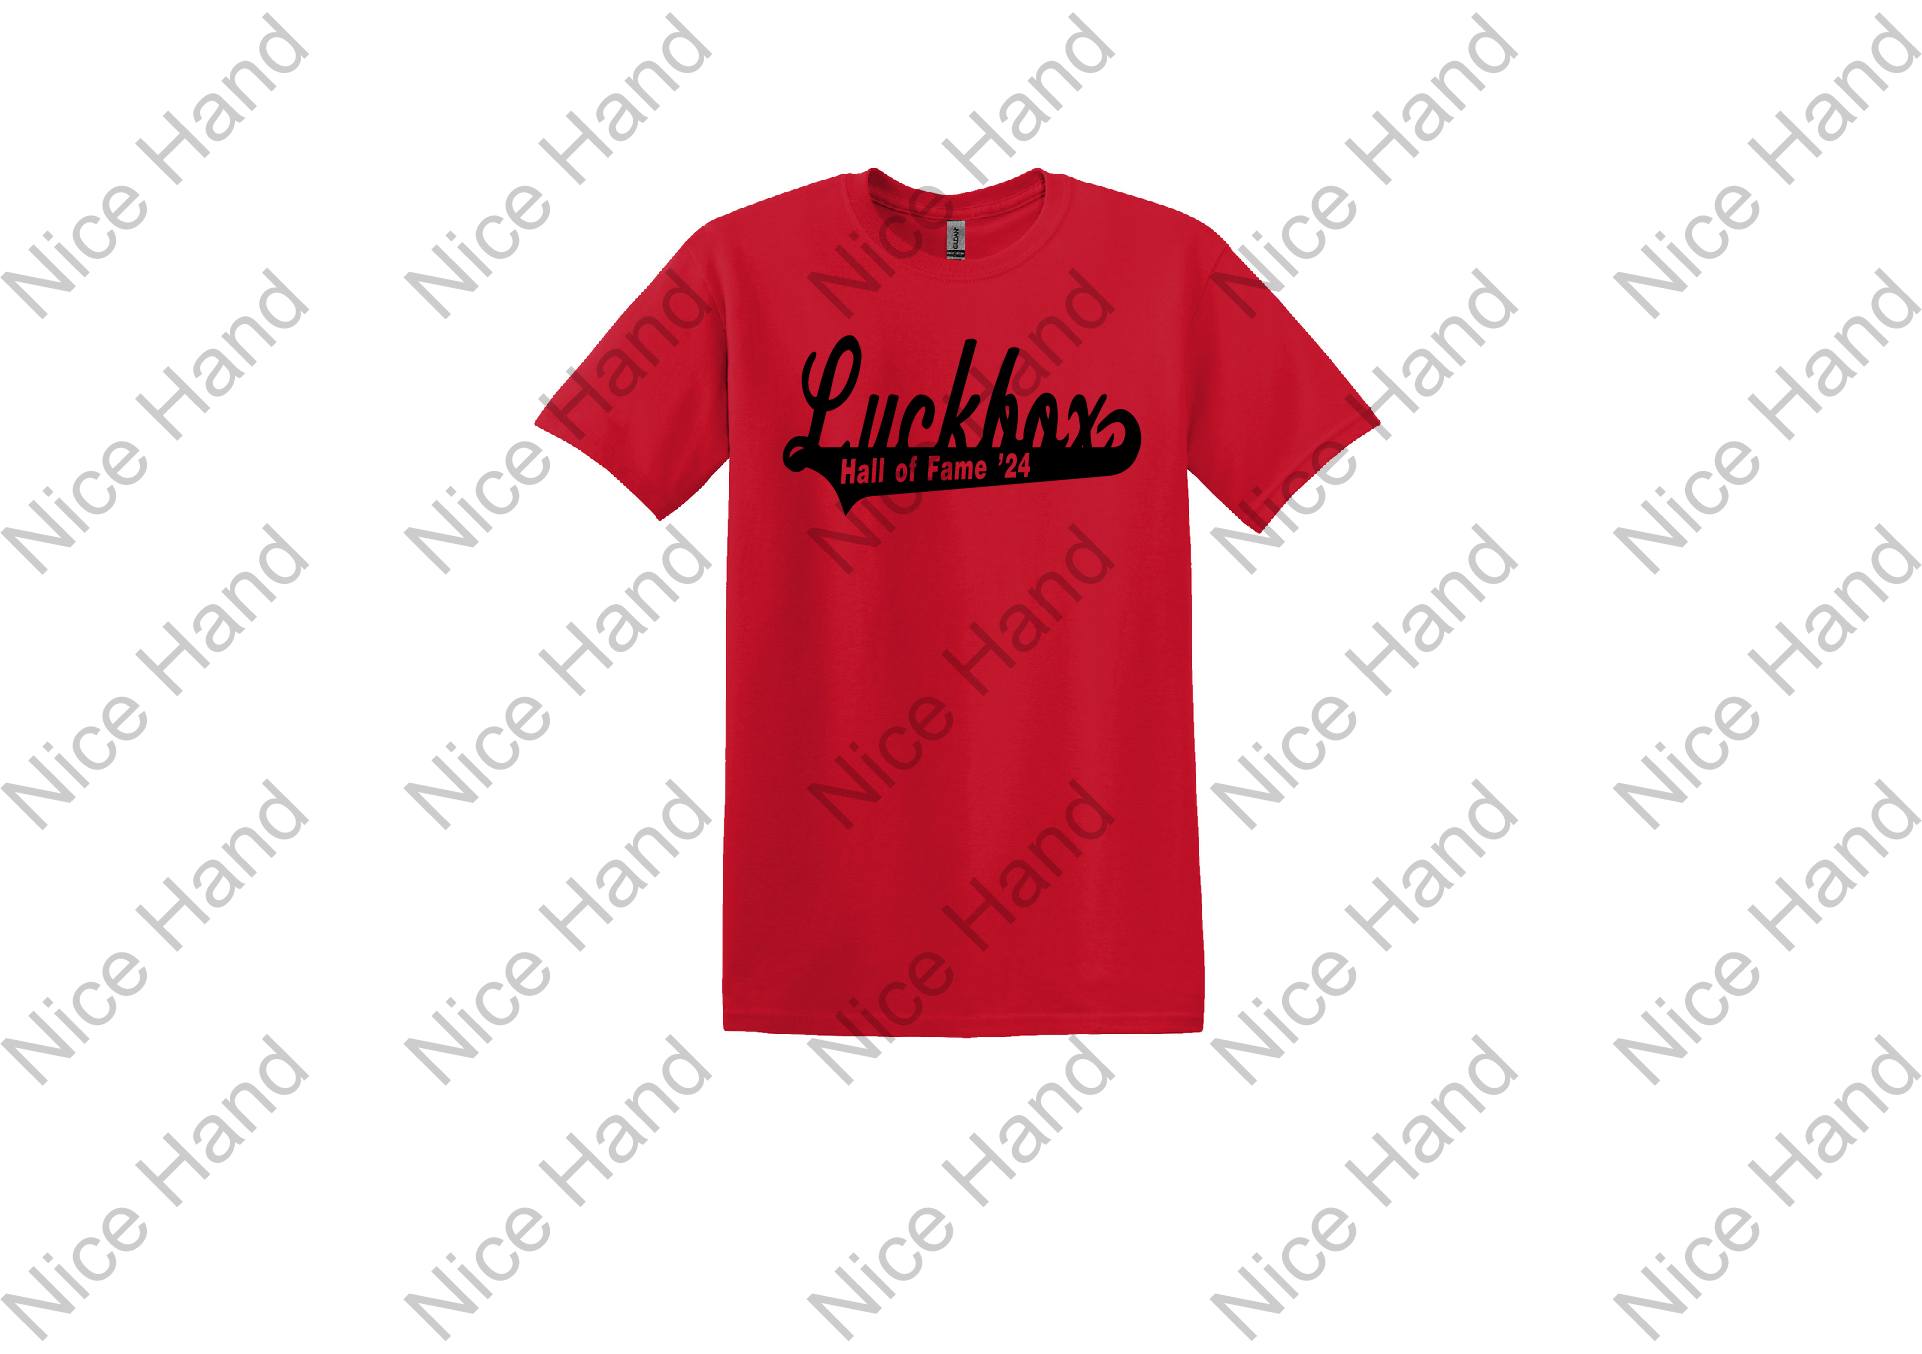 Luckbox Hall of Fame T-shirt